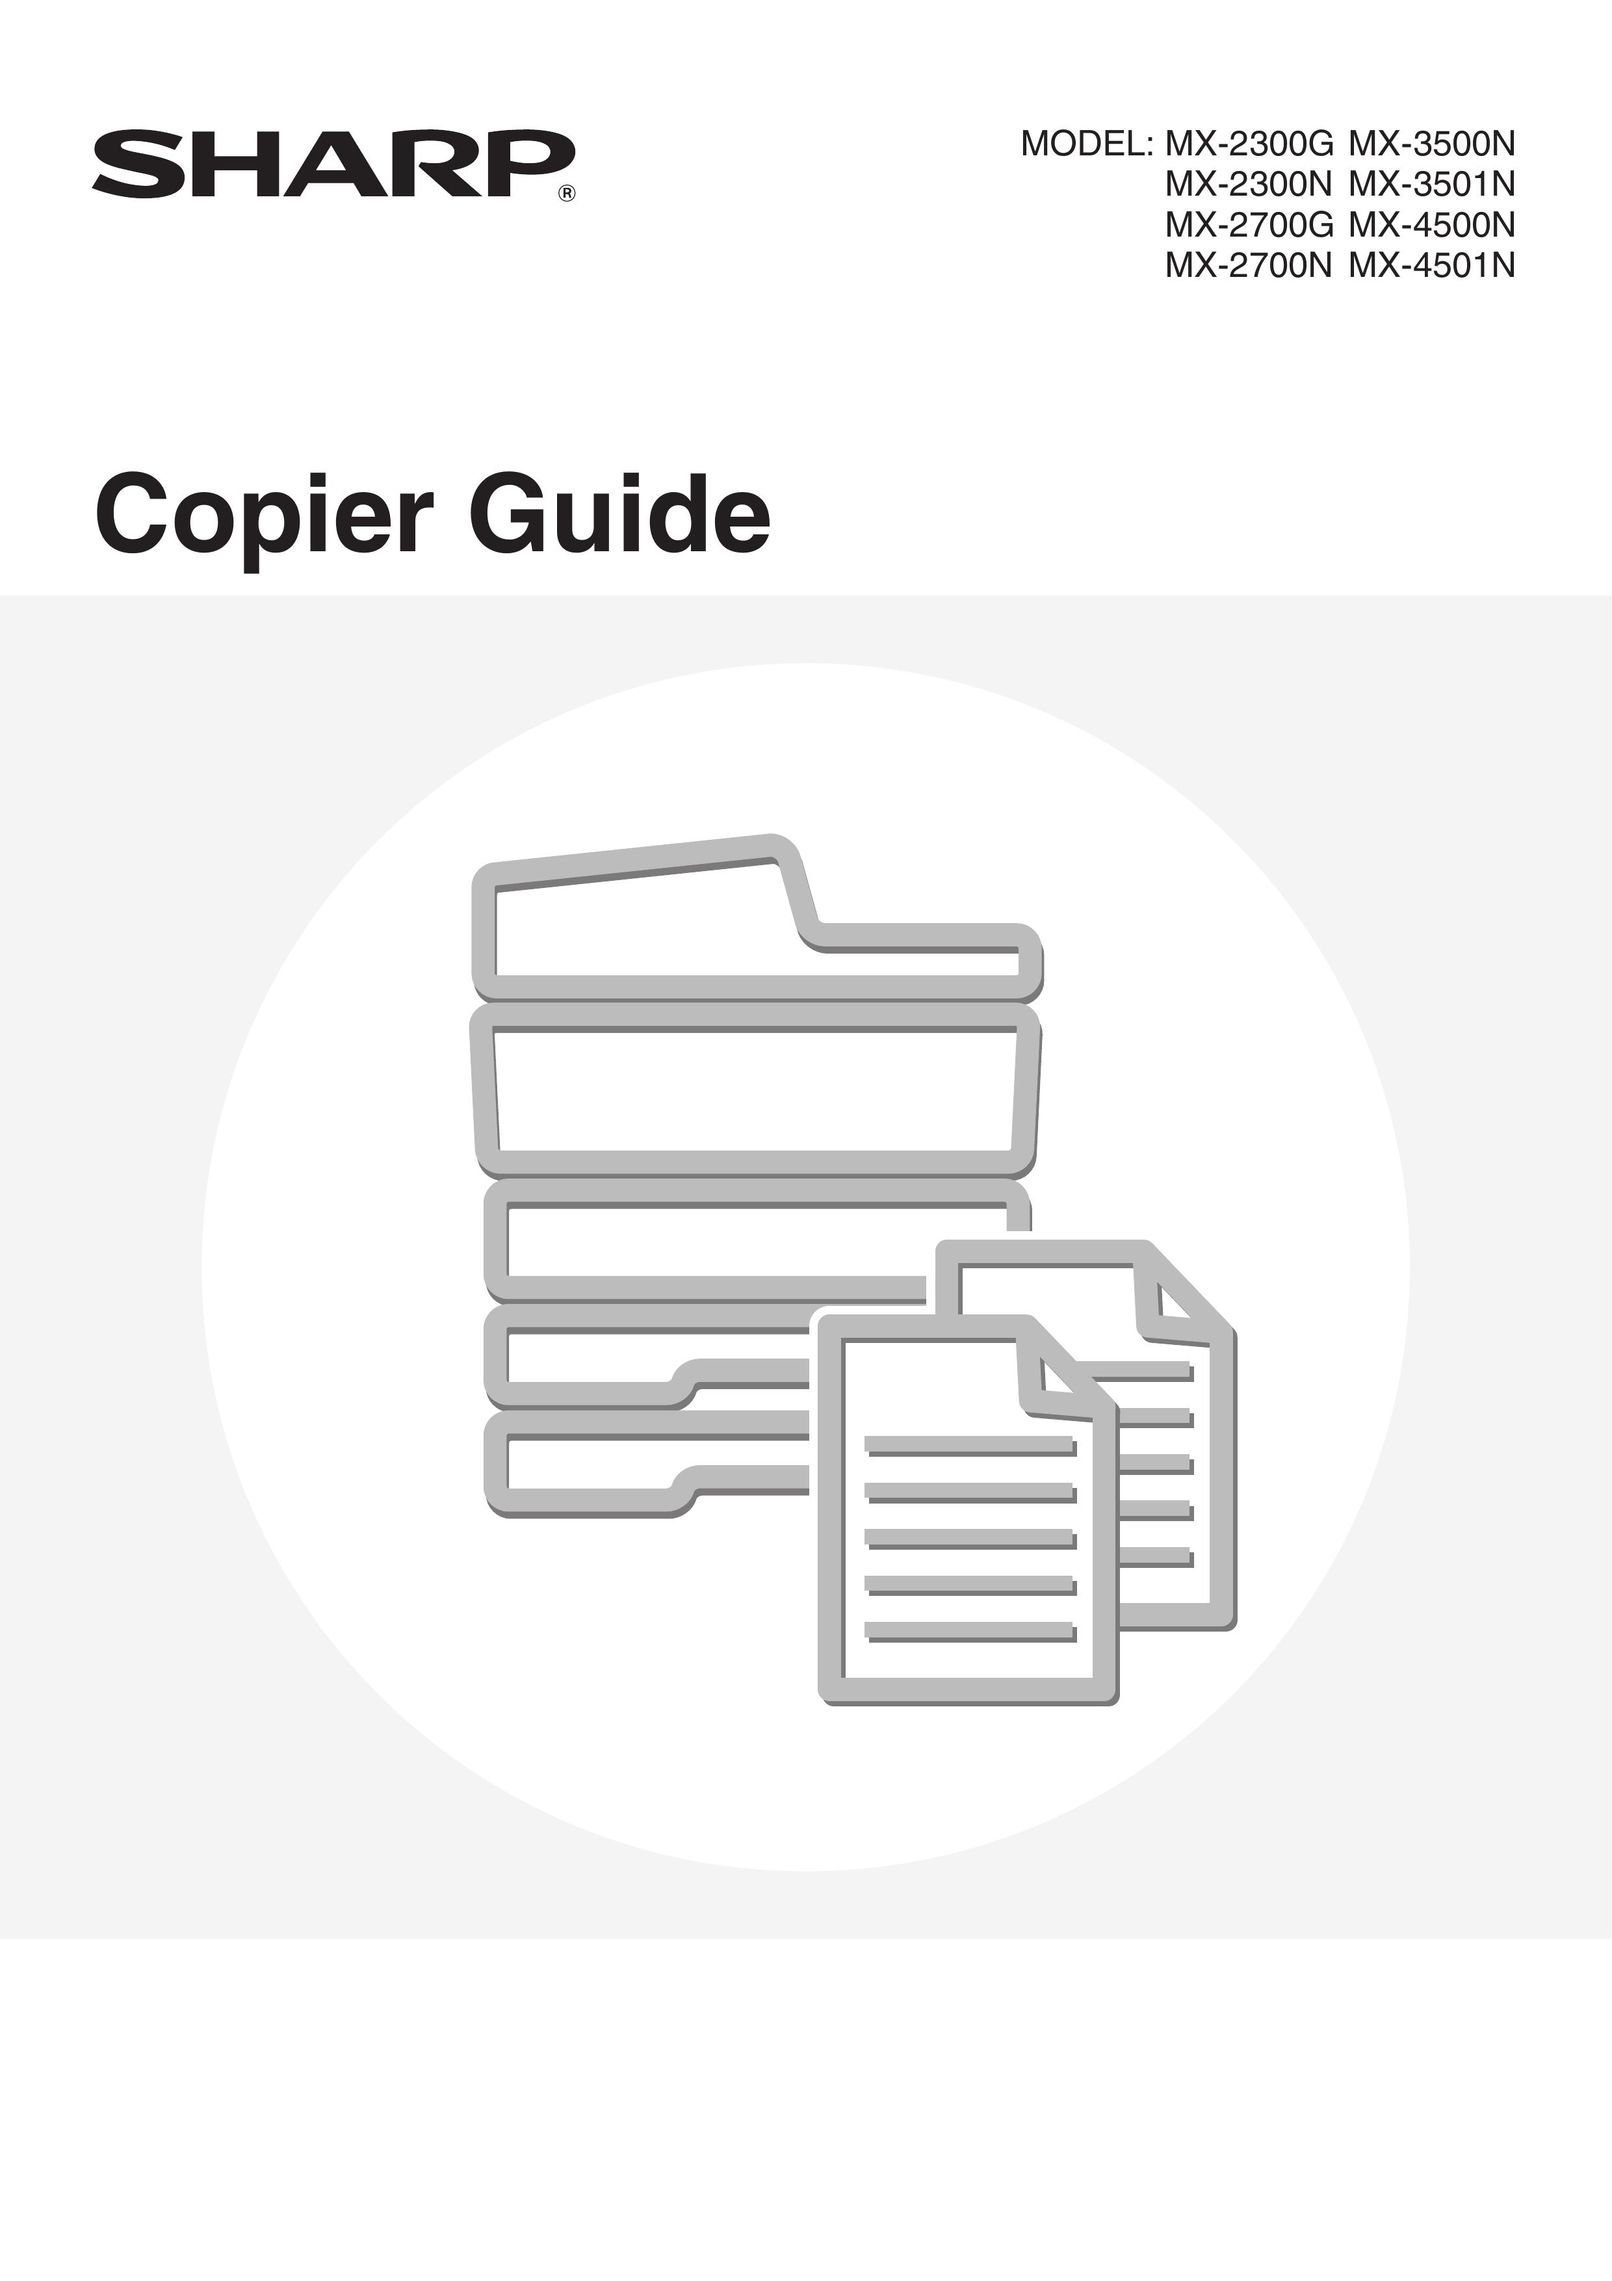 Sharp MX-3501N Copier User Manual